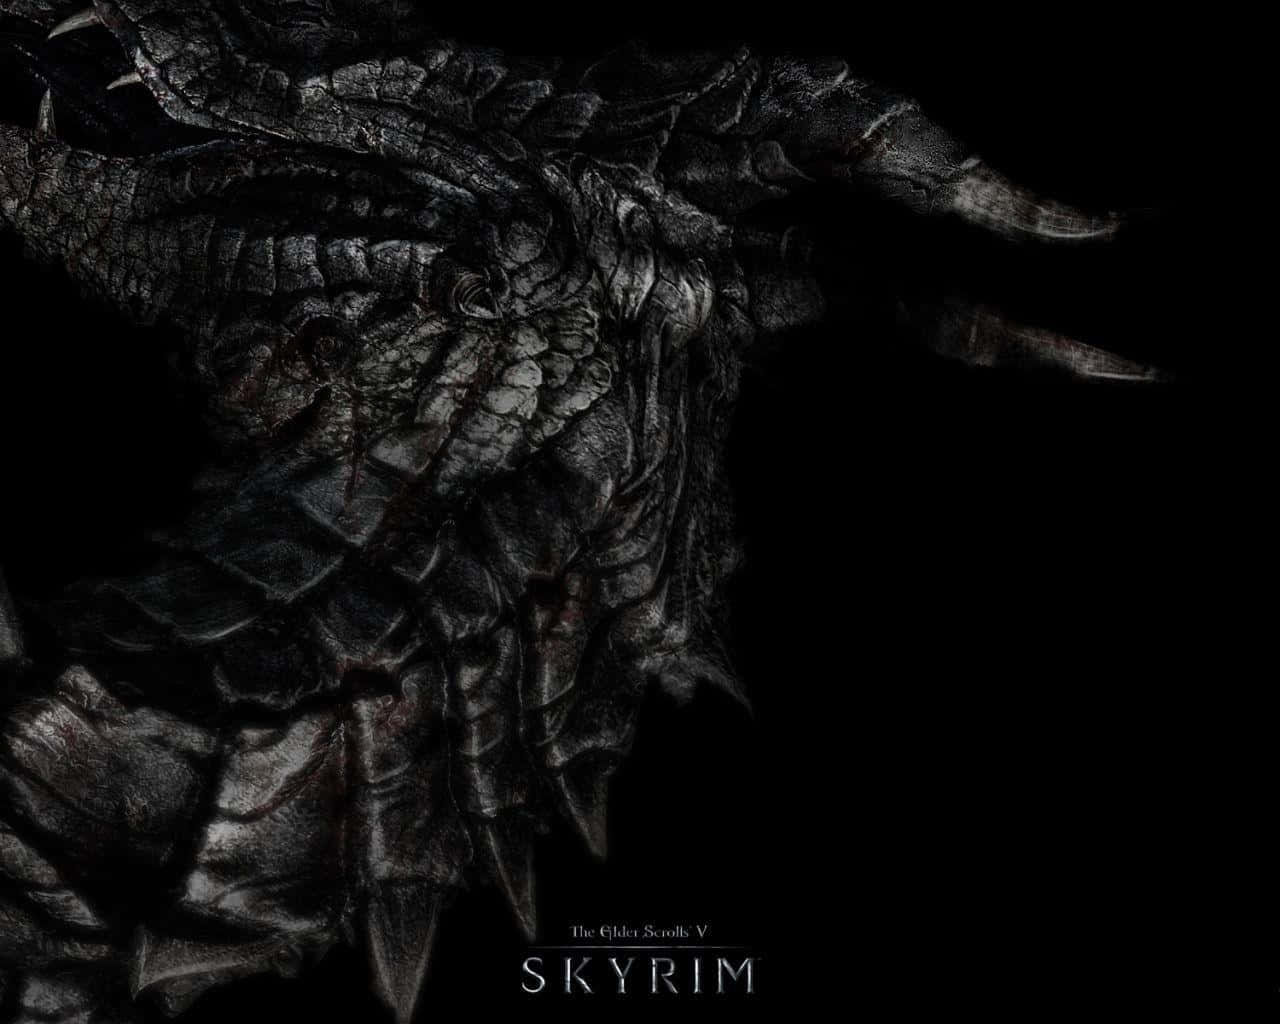 The Dragonborn embarks on an epic adventure in The Elder Scrolls V: Skyrim